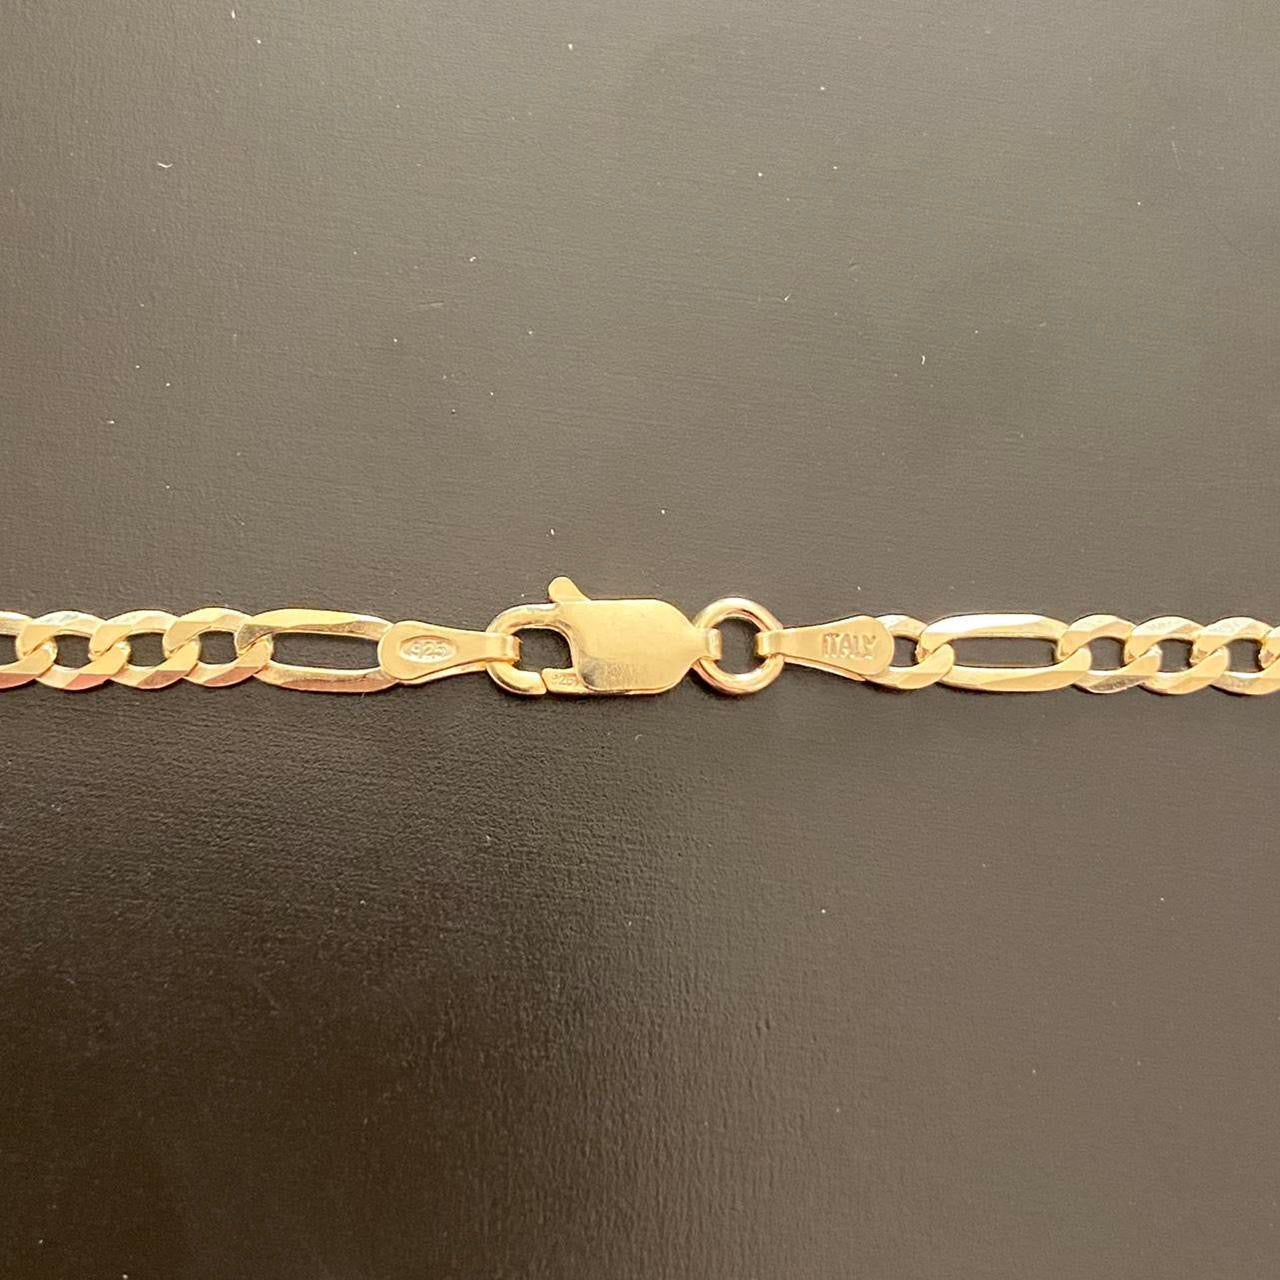 14k Gold Vermeil Figaro Chain 18in 4mm